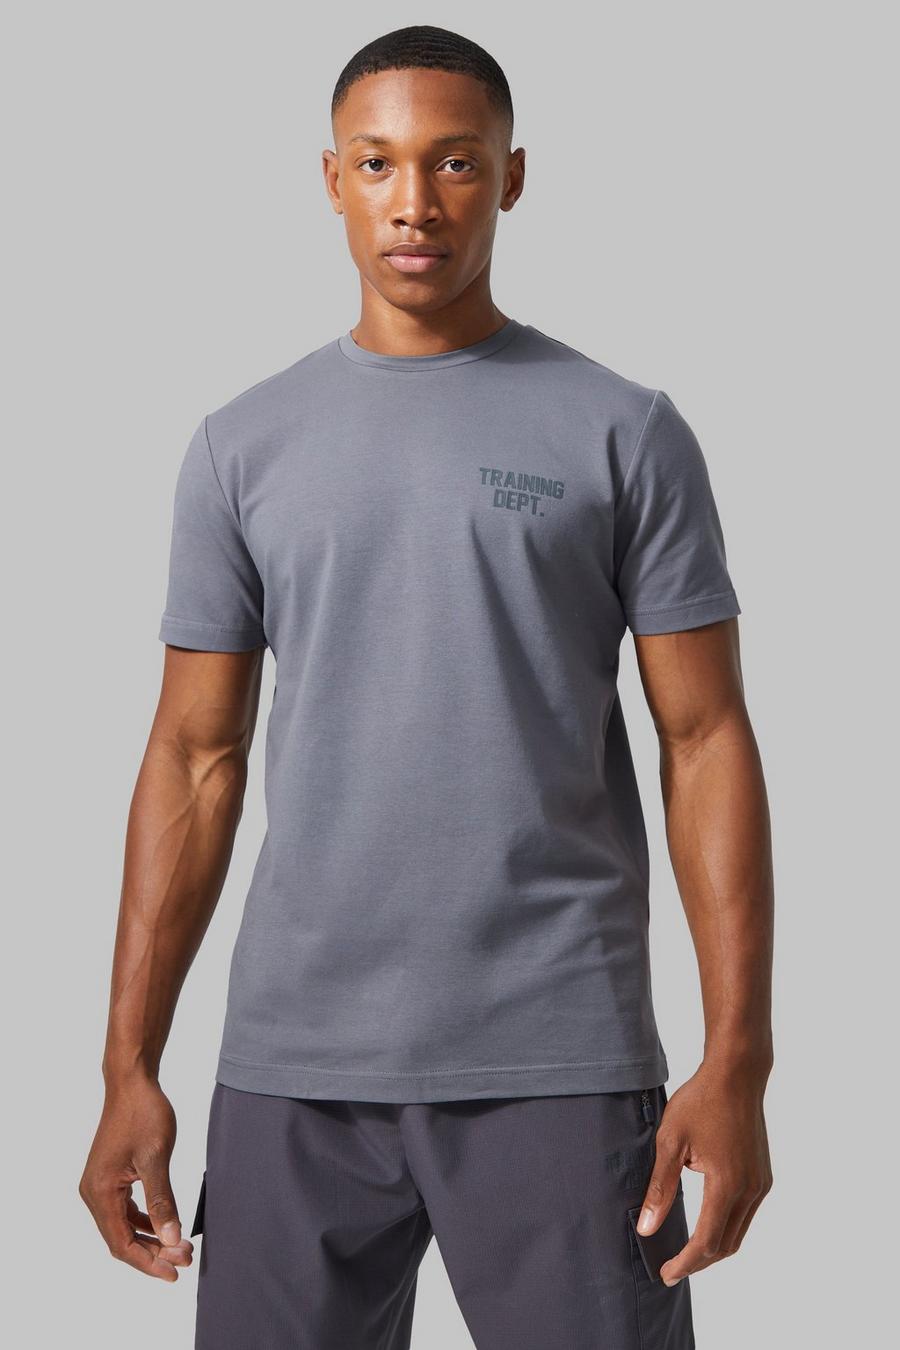 Charcoal gris Active Slim Fit Training Dept Performance T-Shirt